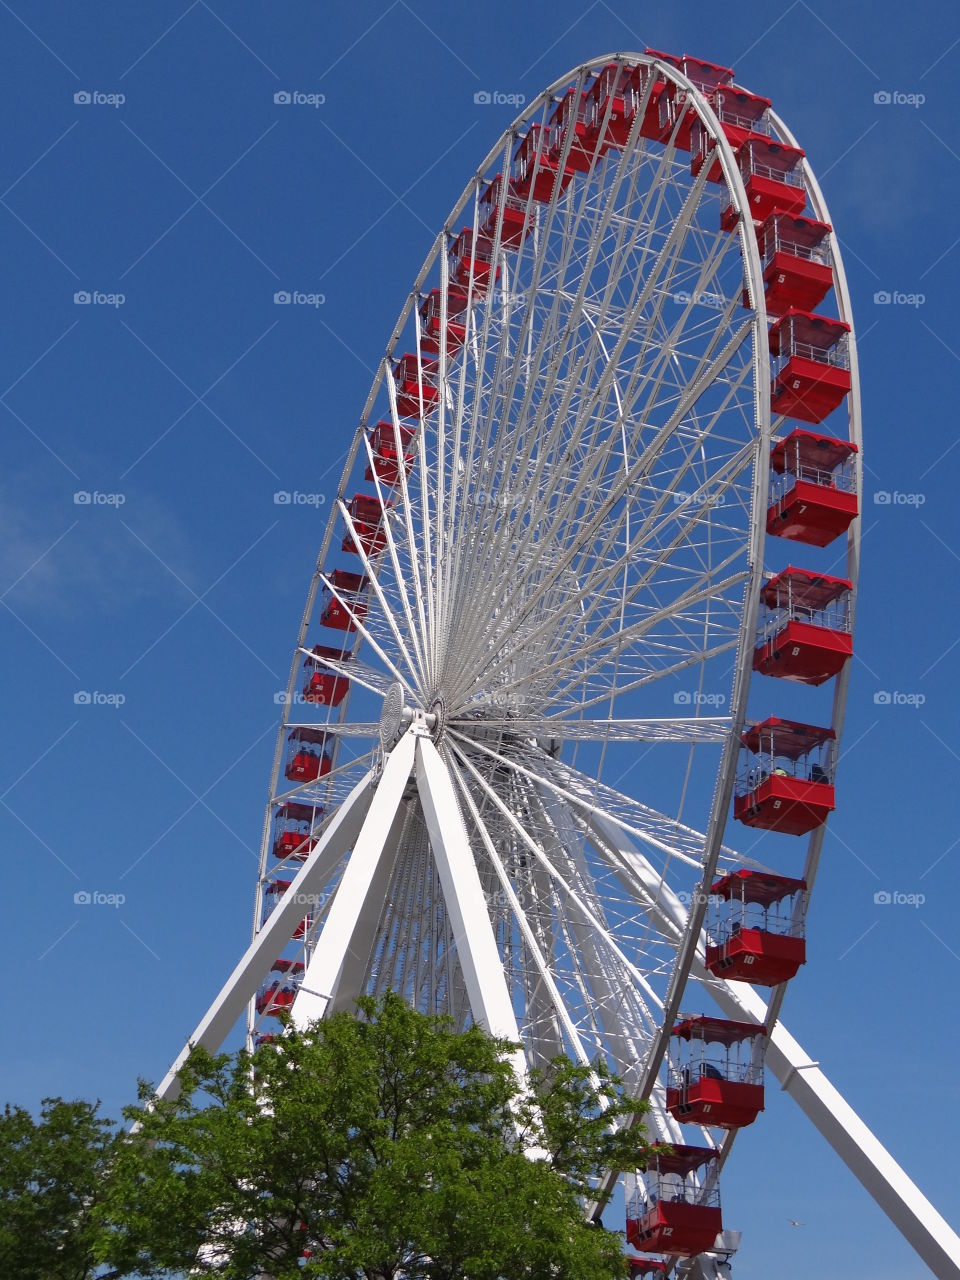 Ferris Wheel. The giant Ferris wheel at Chicago's Navy Pier